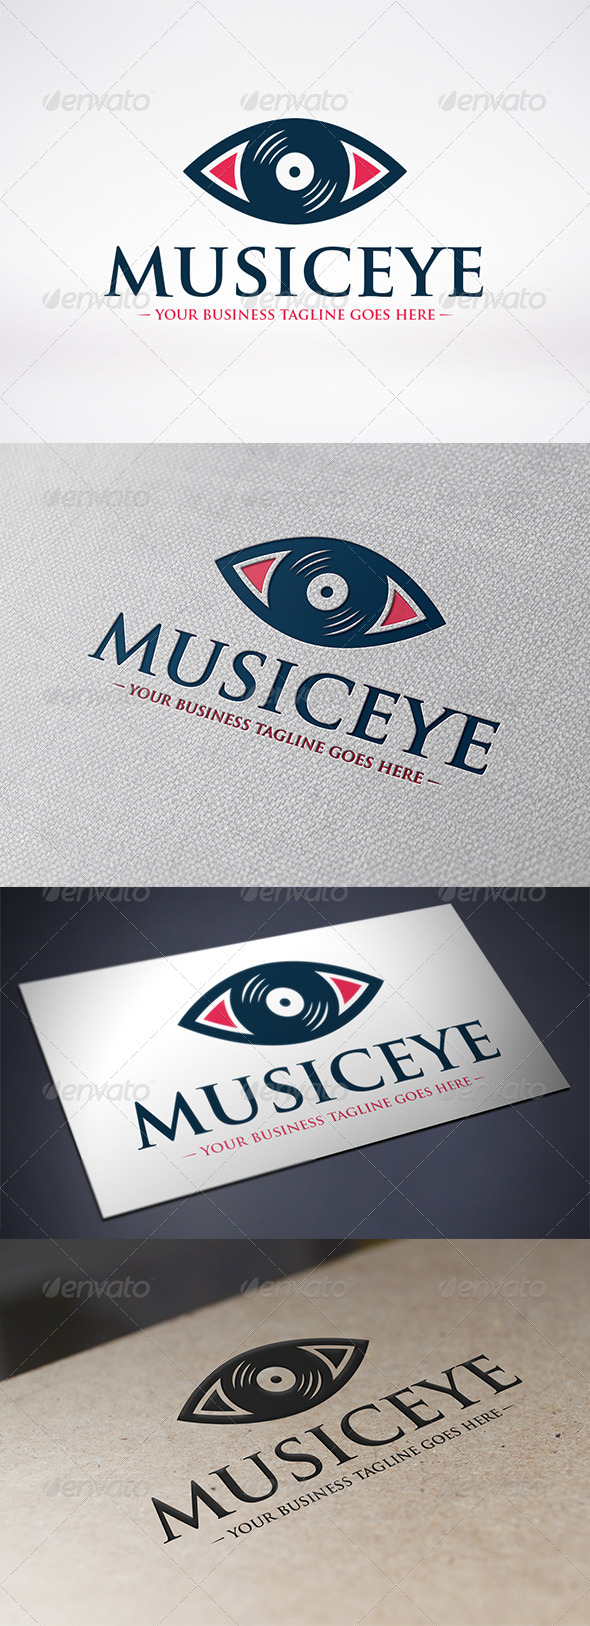 Music Eye Logo Template